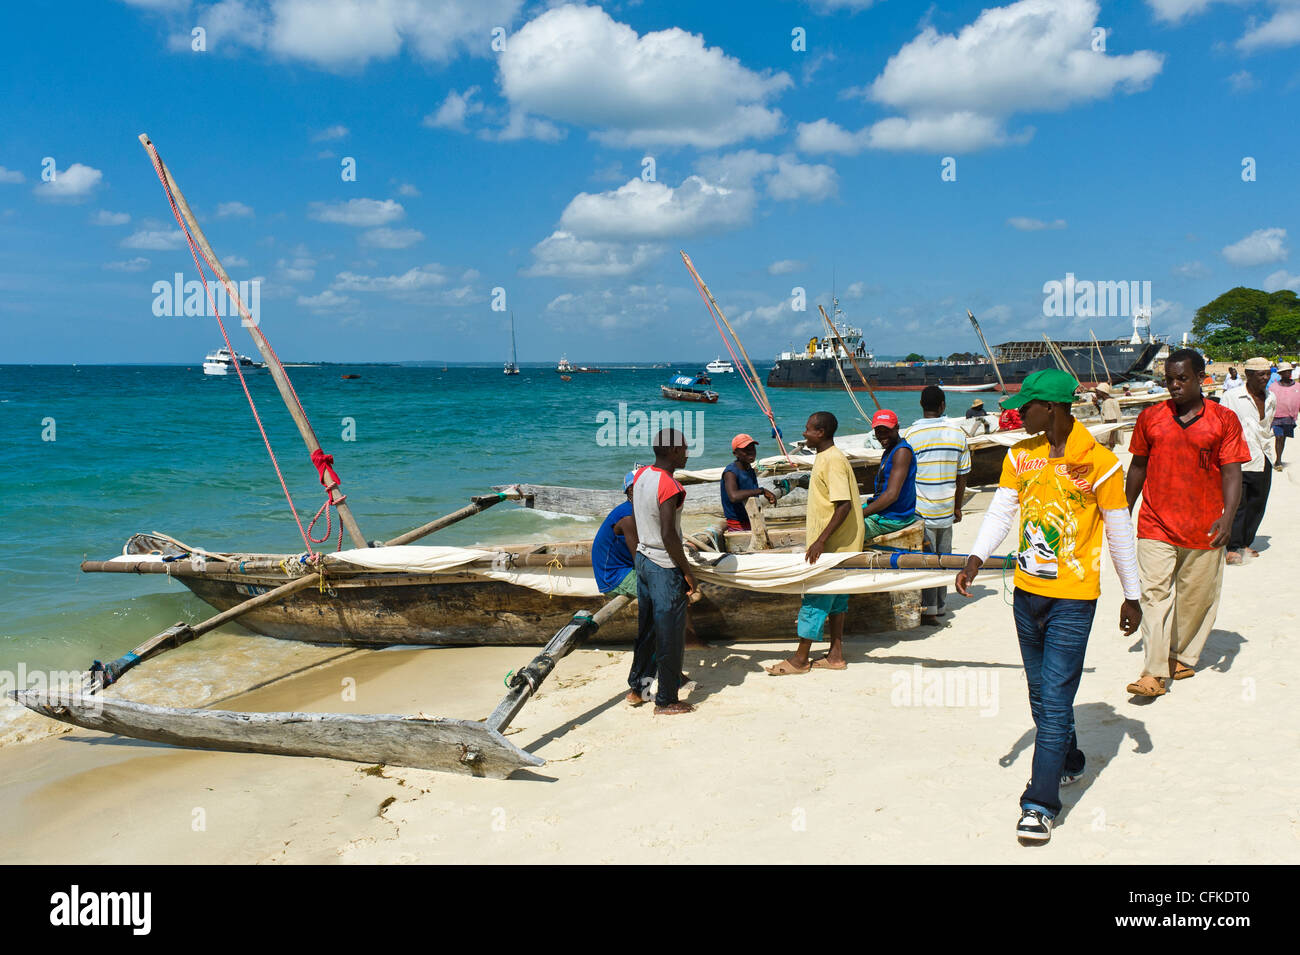 Fishermen prepare their 'Ngalawa' the traditional double-outrigger boats for a regatta in Stone Town Zanzibar Tanzania Stock Photo